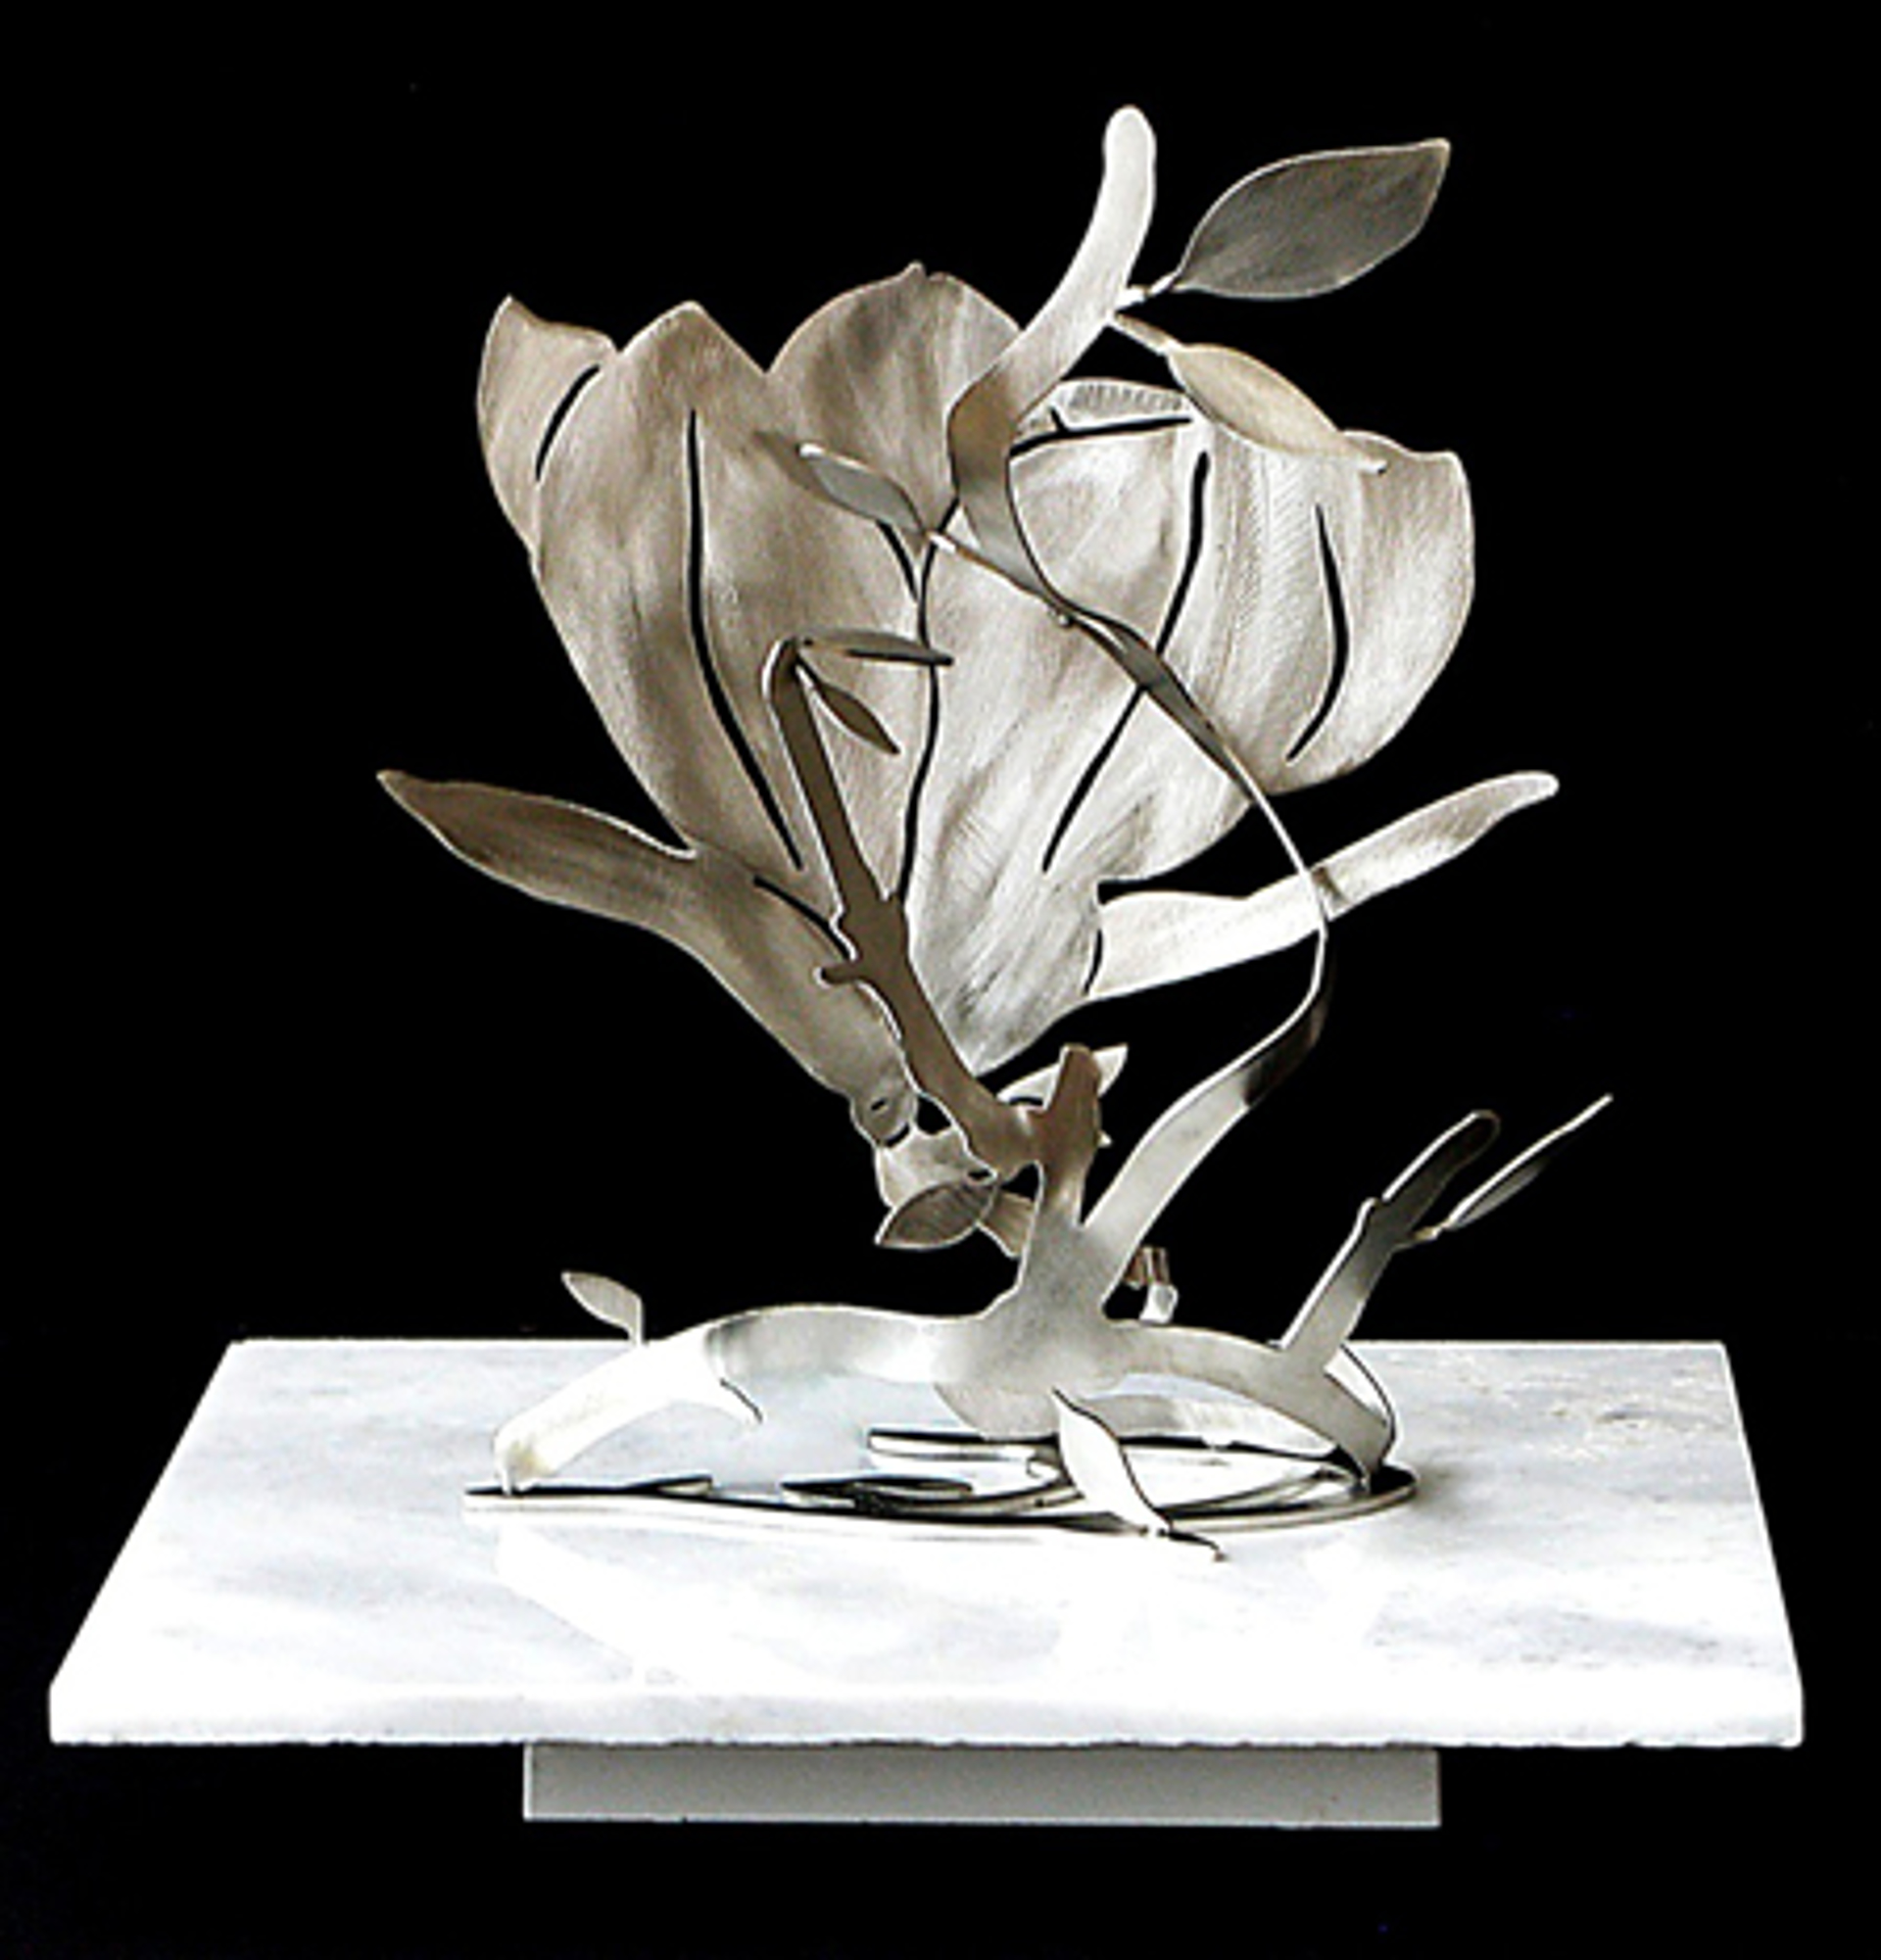 Steel Magnolia VI ed. 3/9 by Babette Bloch